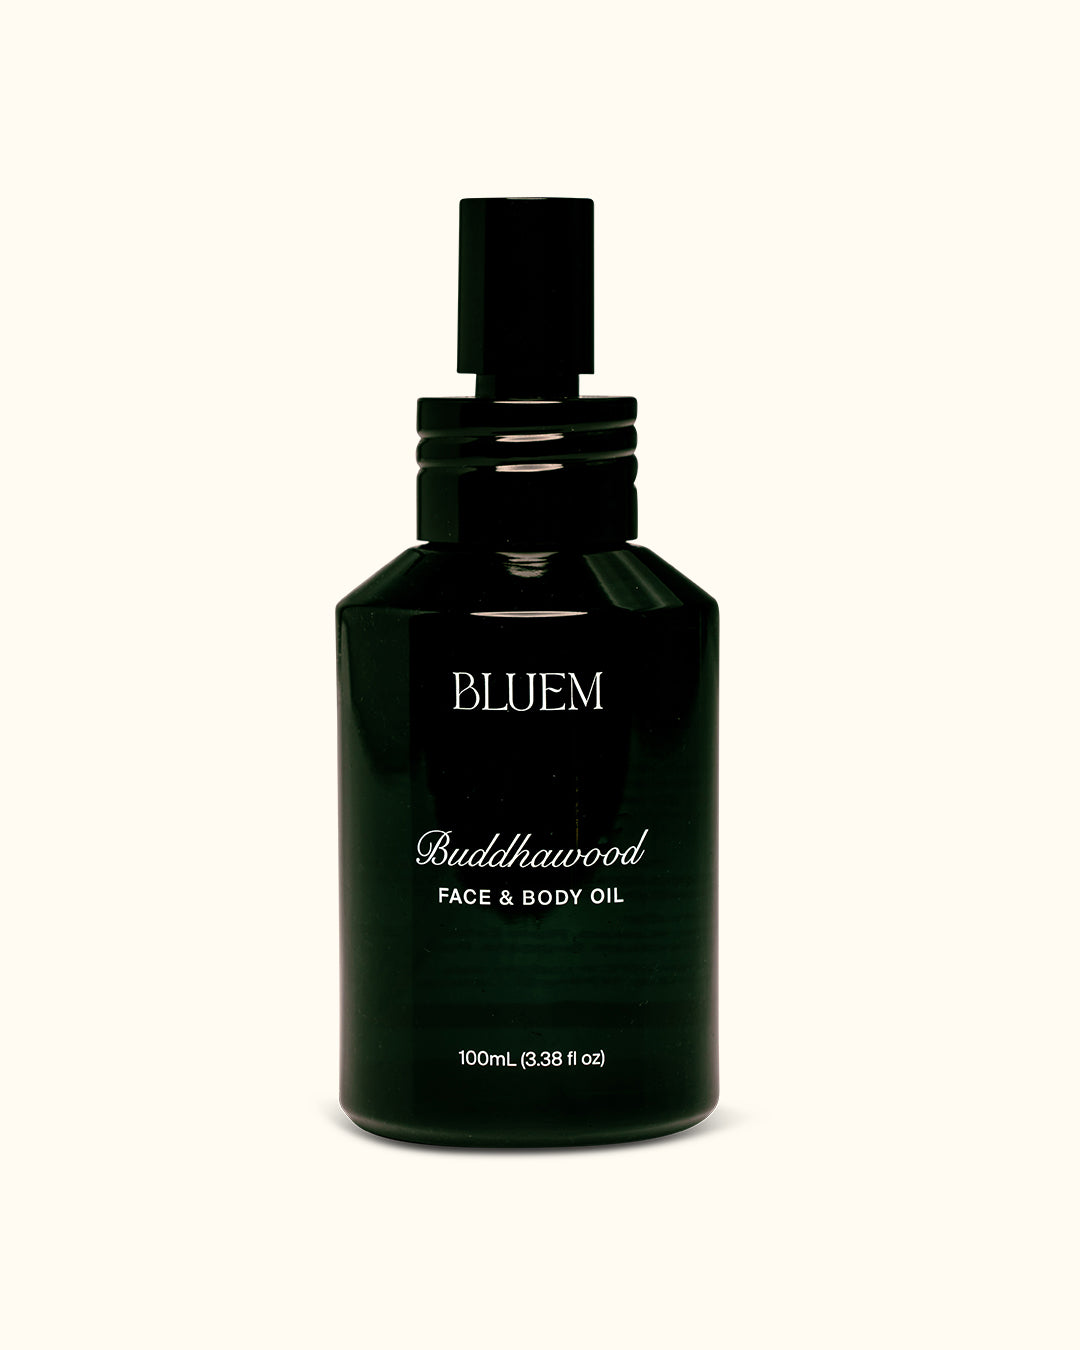 BLUEM Buddhawood Face & Body Oil